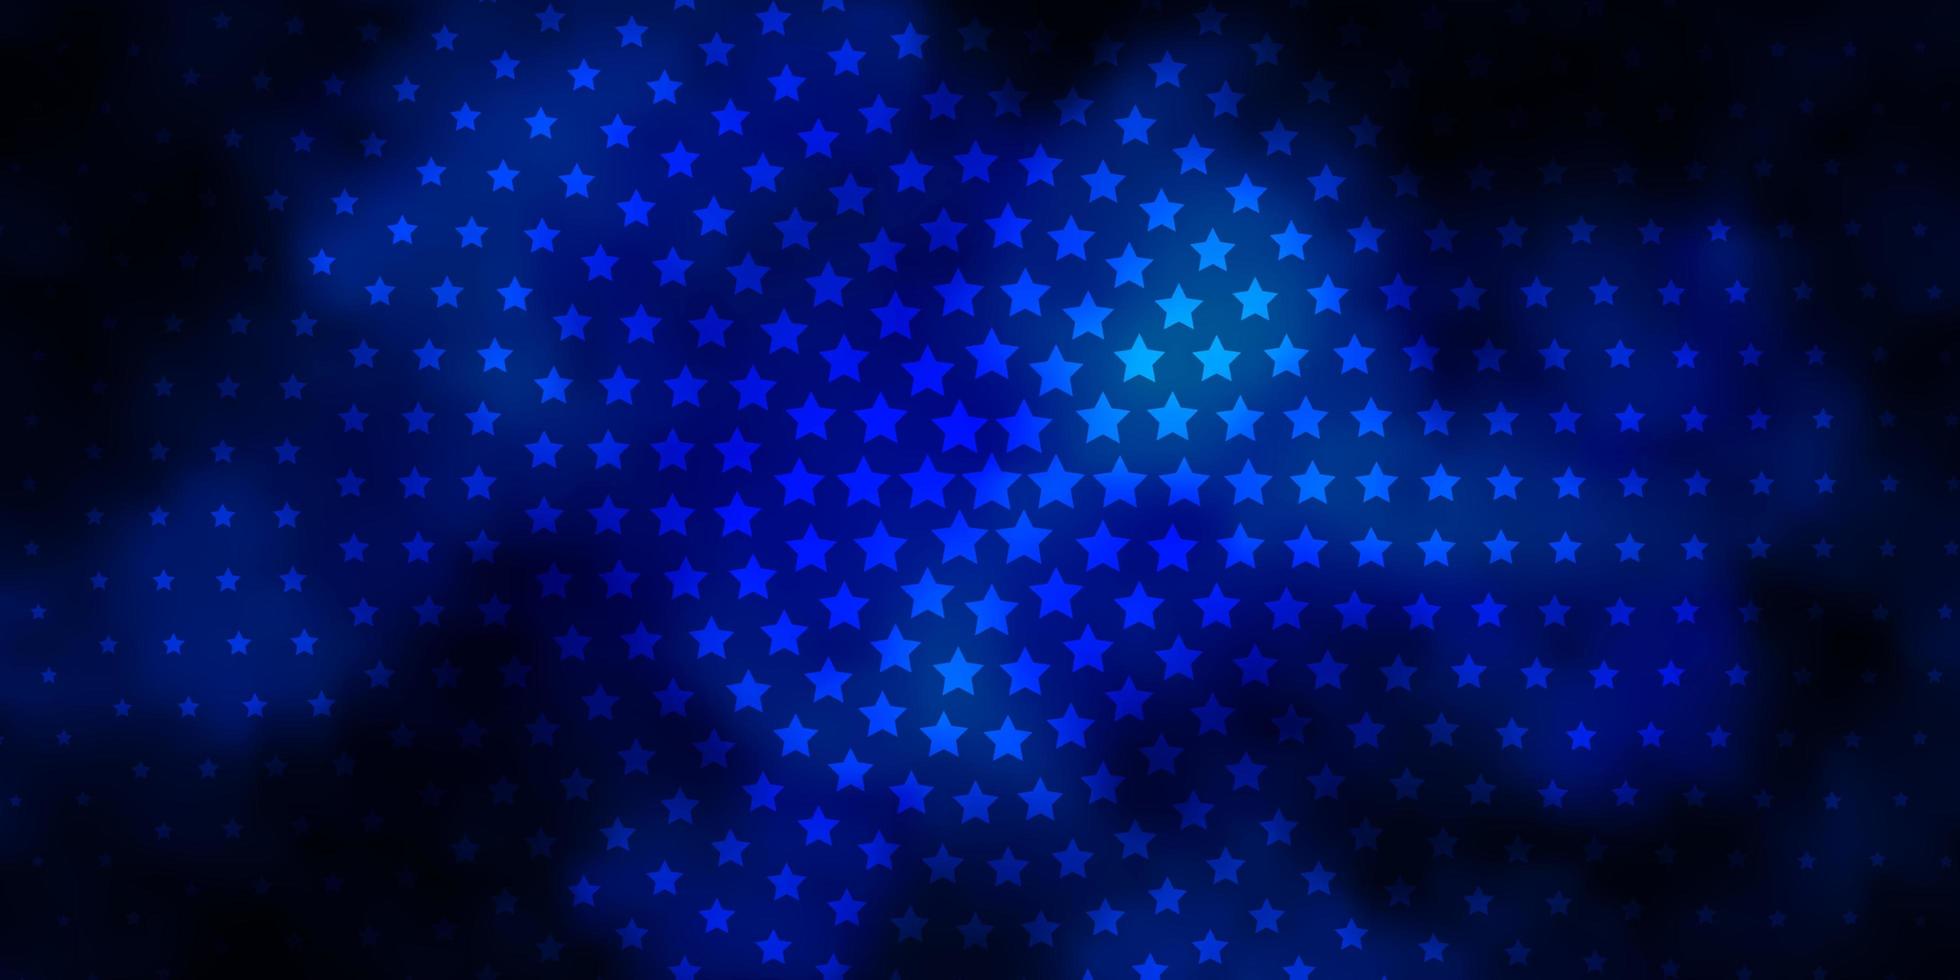 diseño de vector azul oscuro con estrellas brillantes